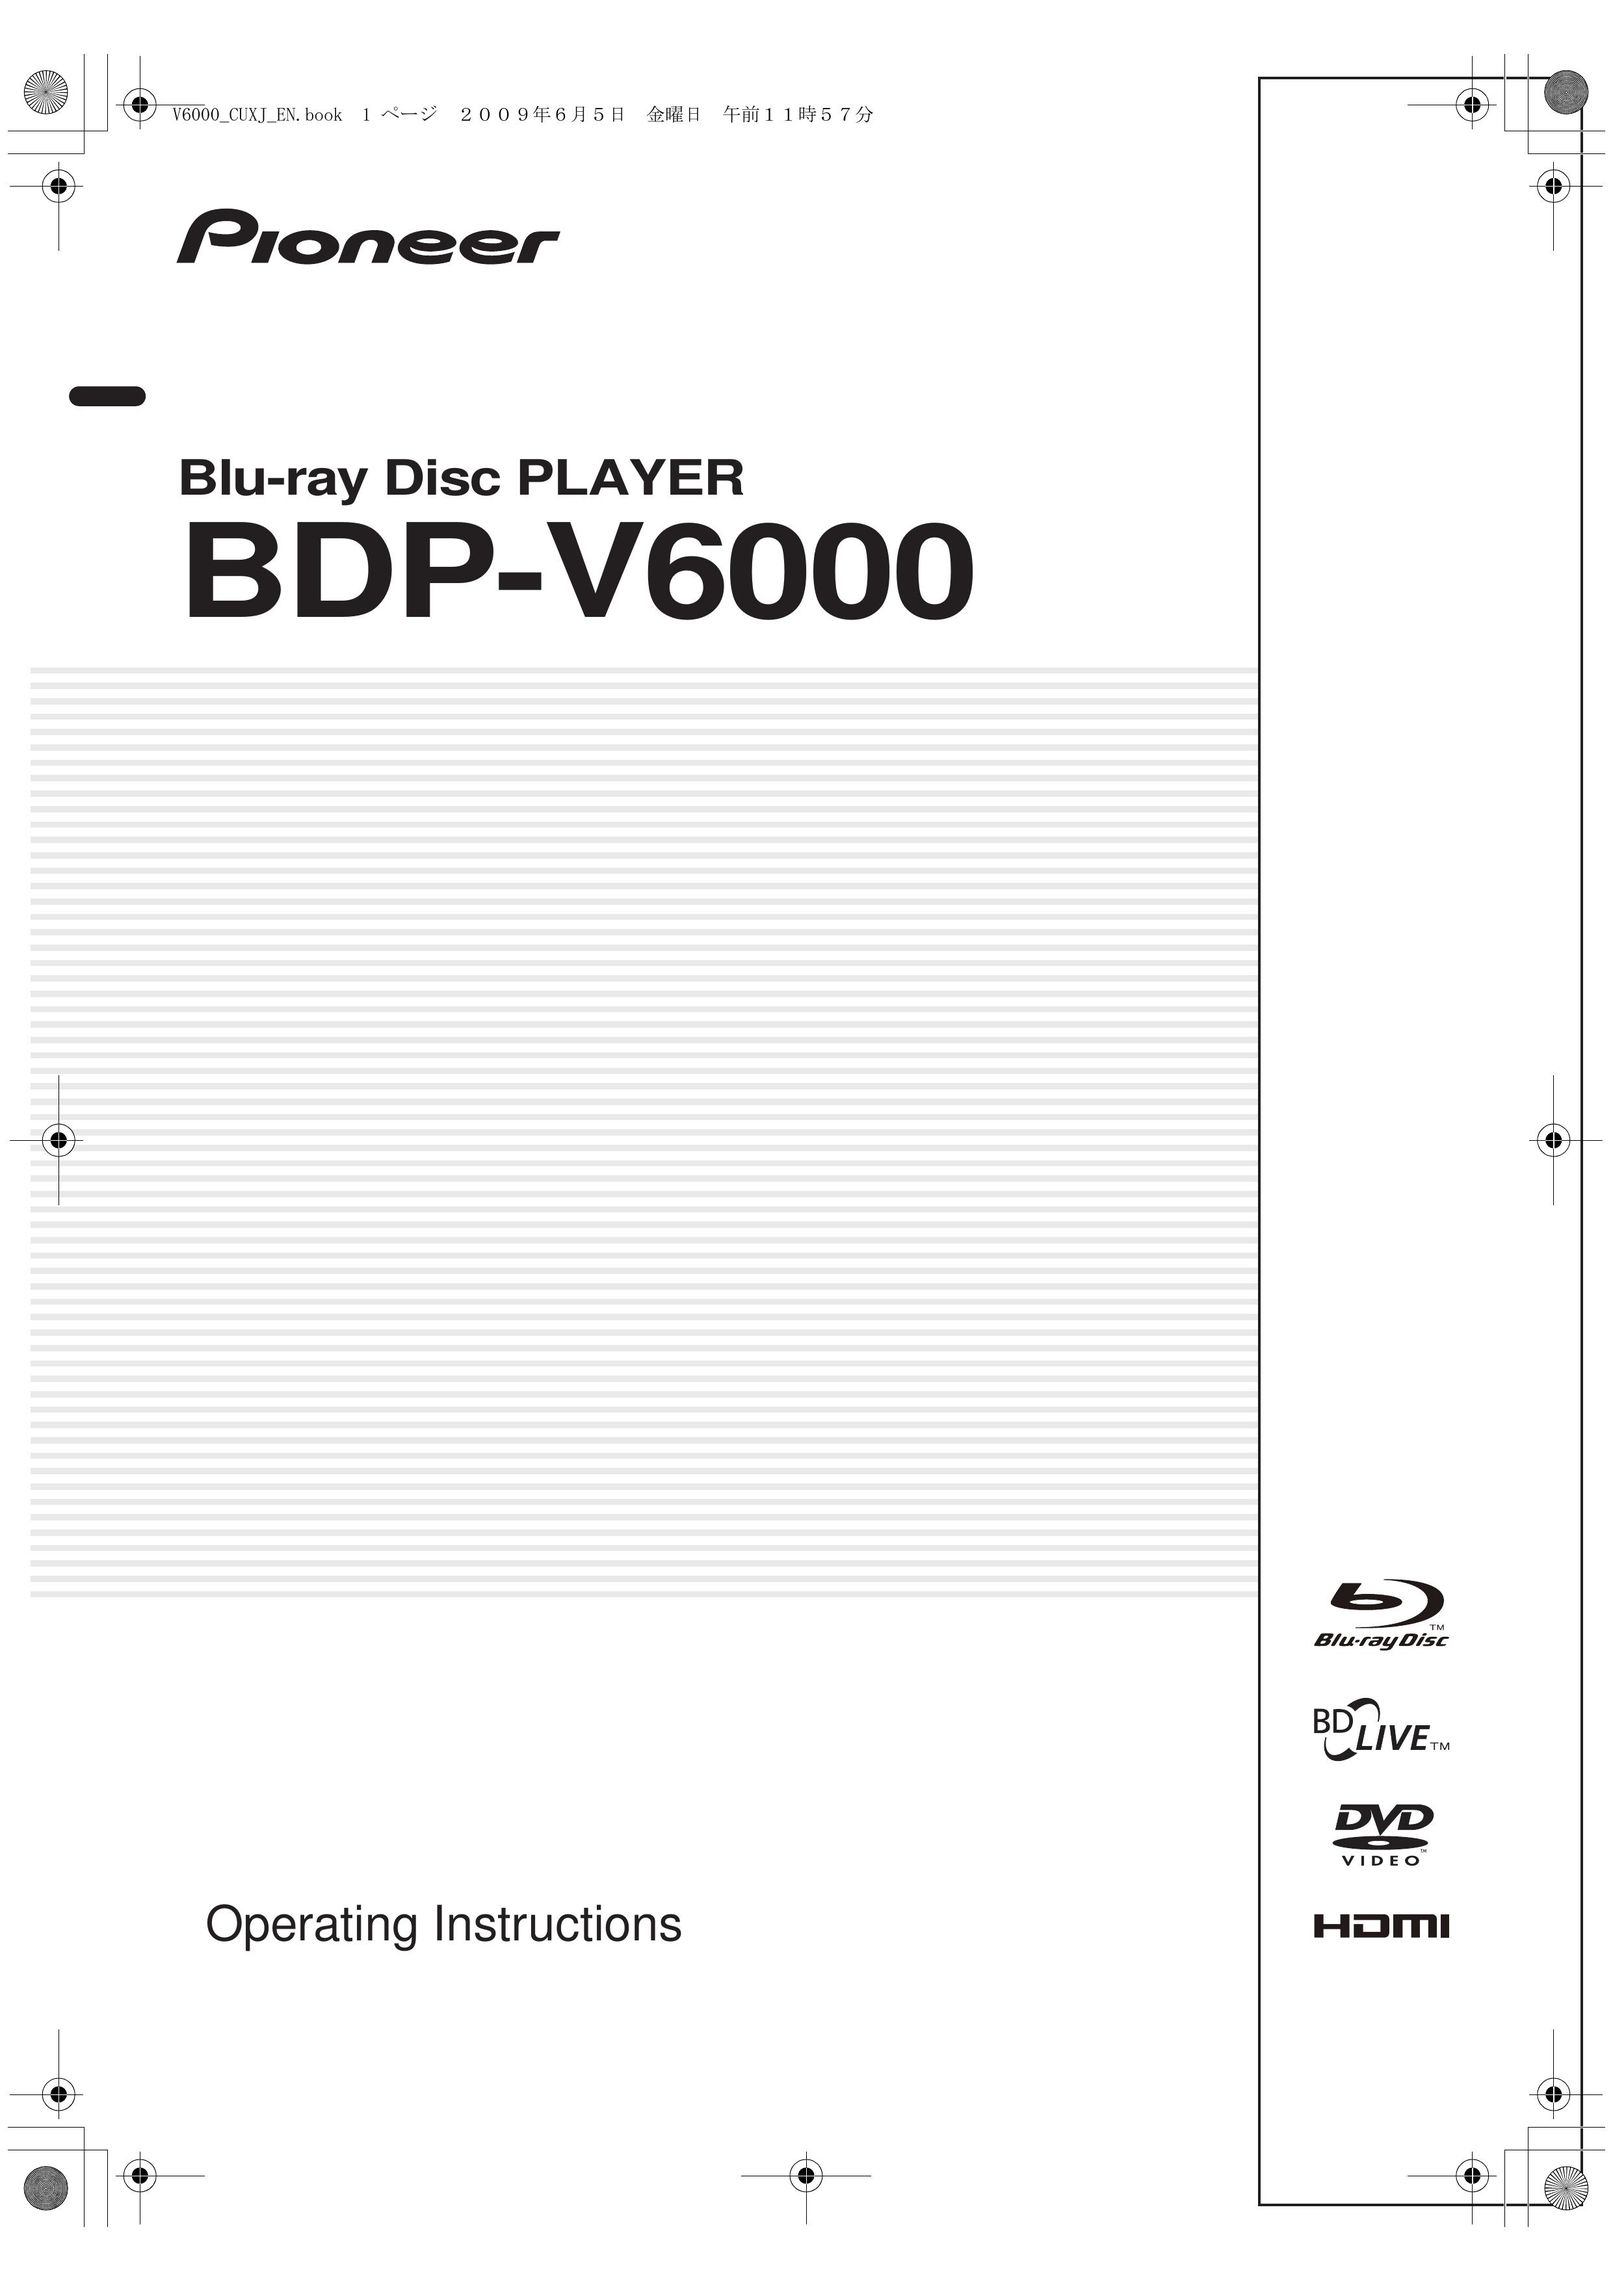 Pioneer BDP-V6000 DVD Player User Manual